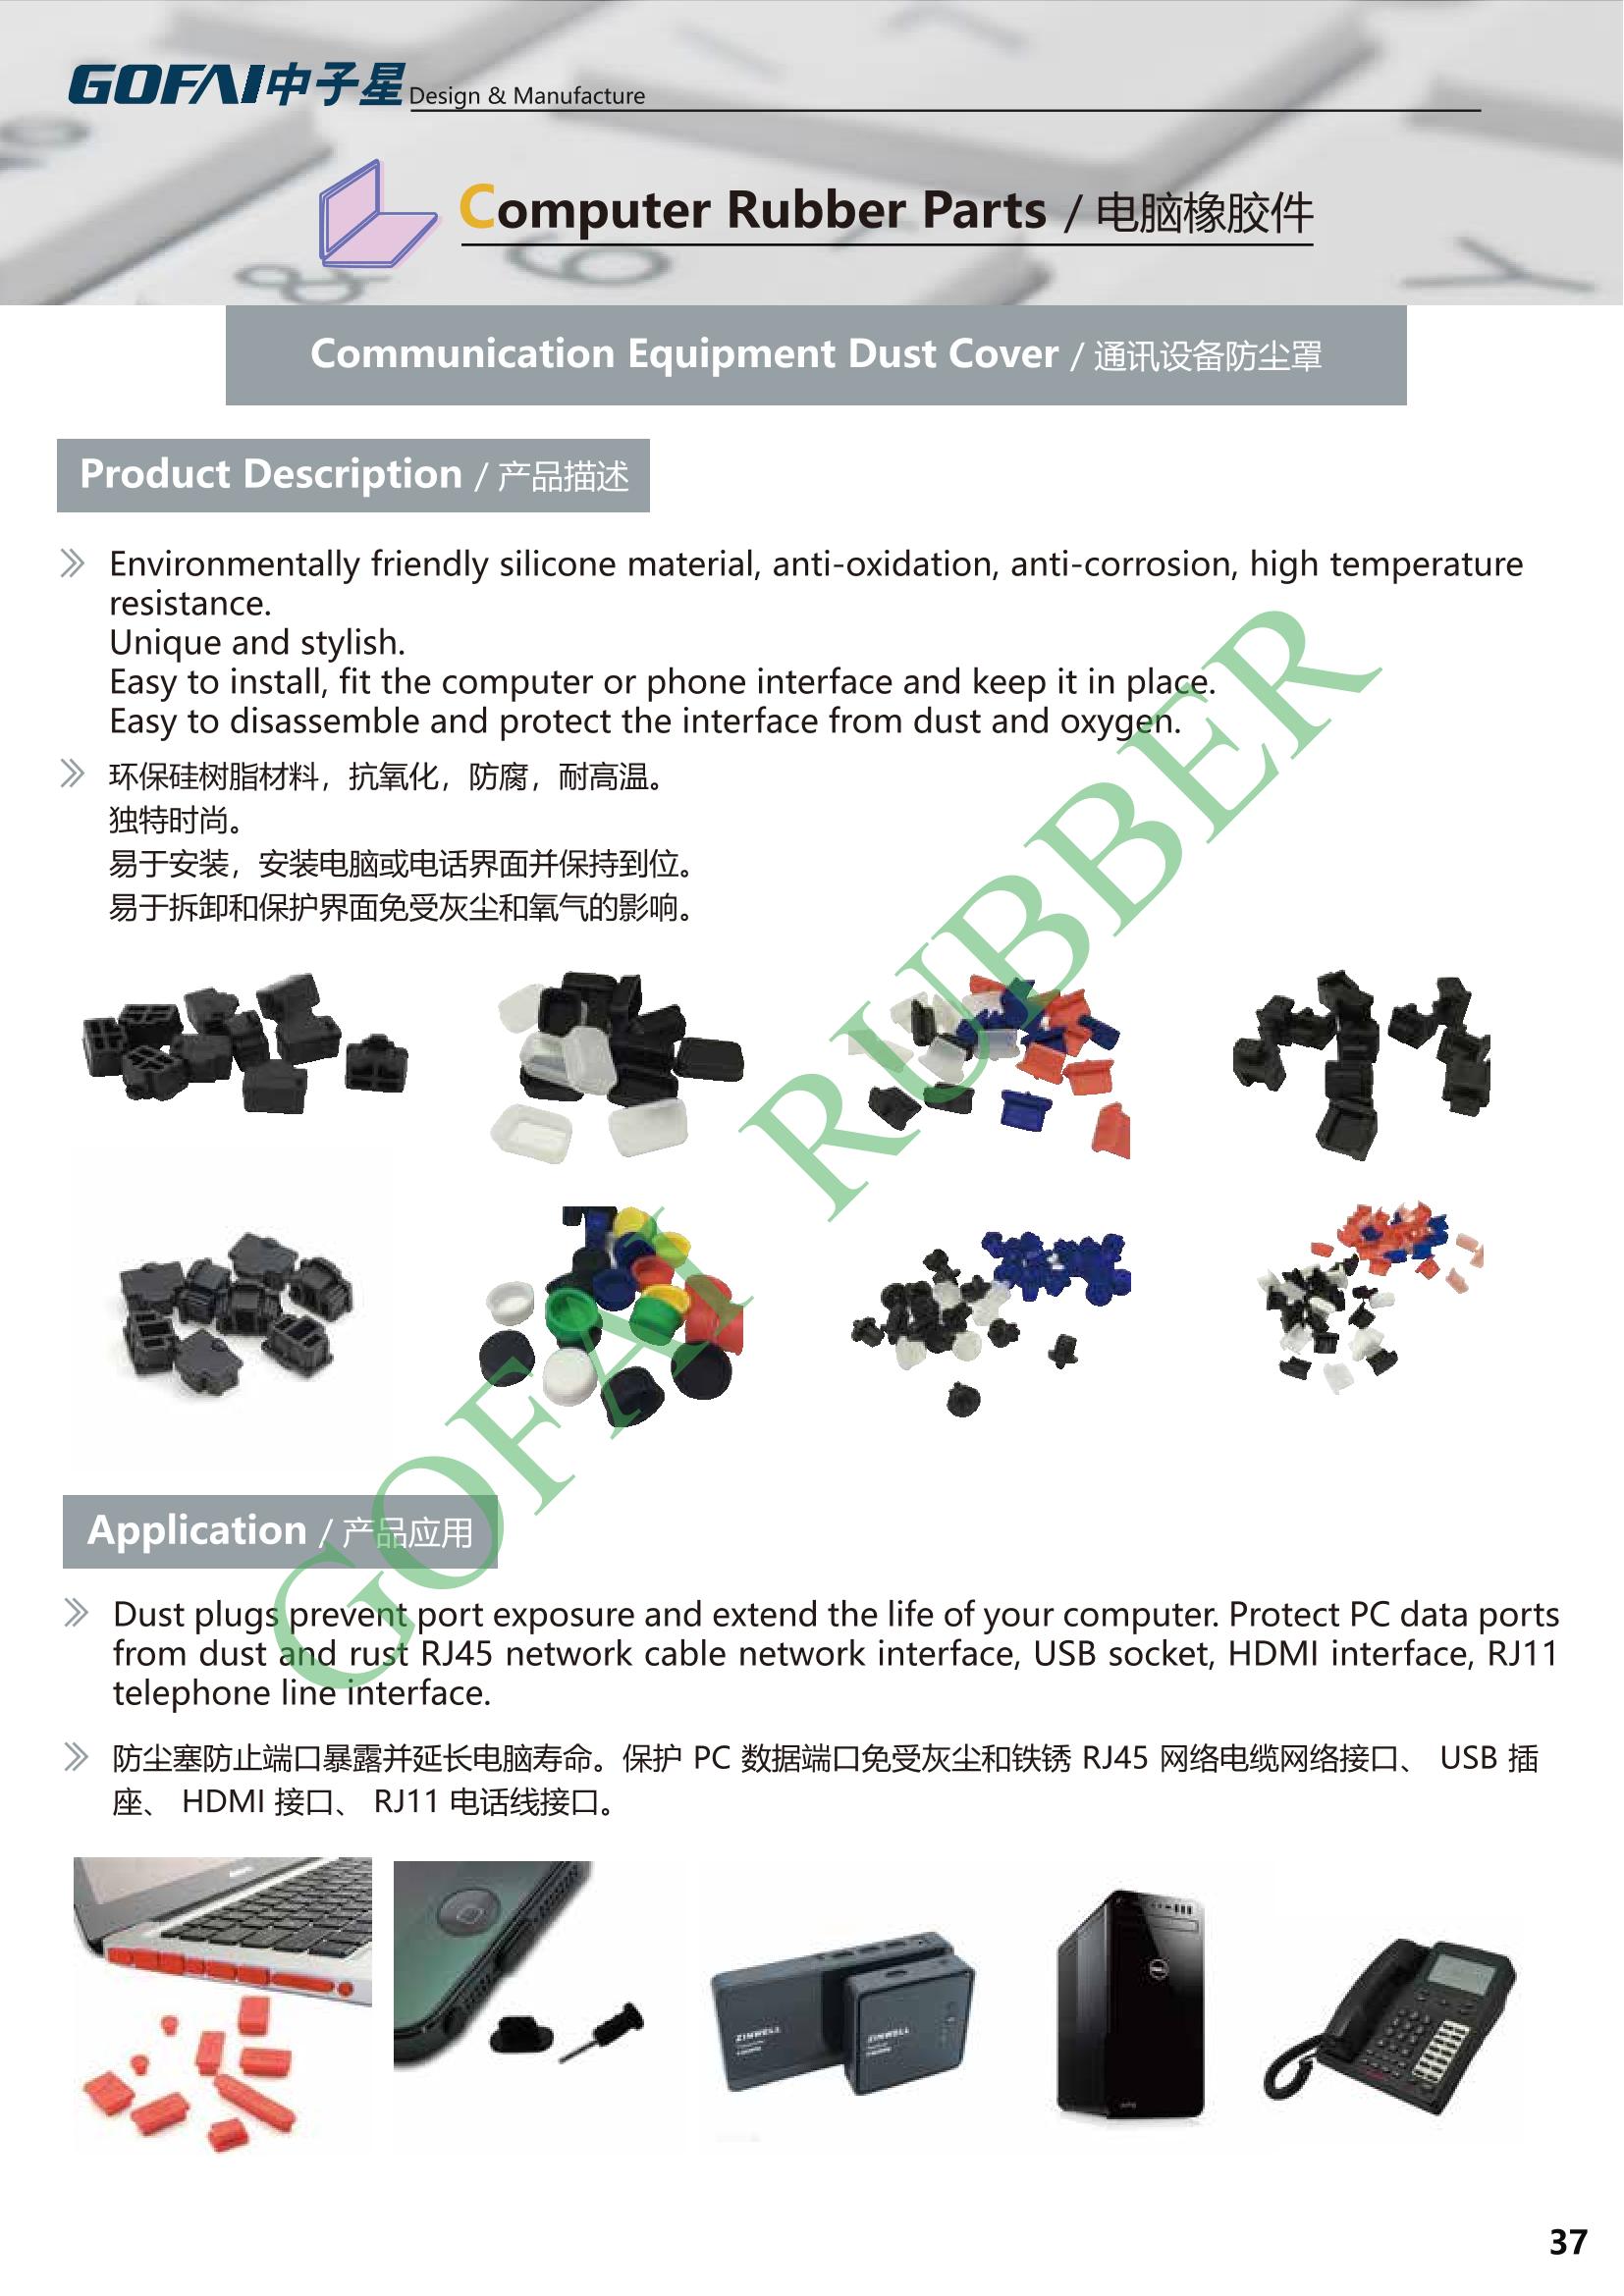 GOFAI rubberplastic products cataloge_37.jpg